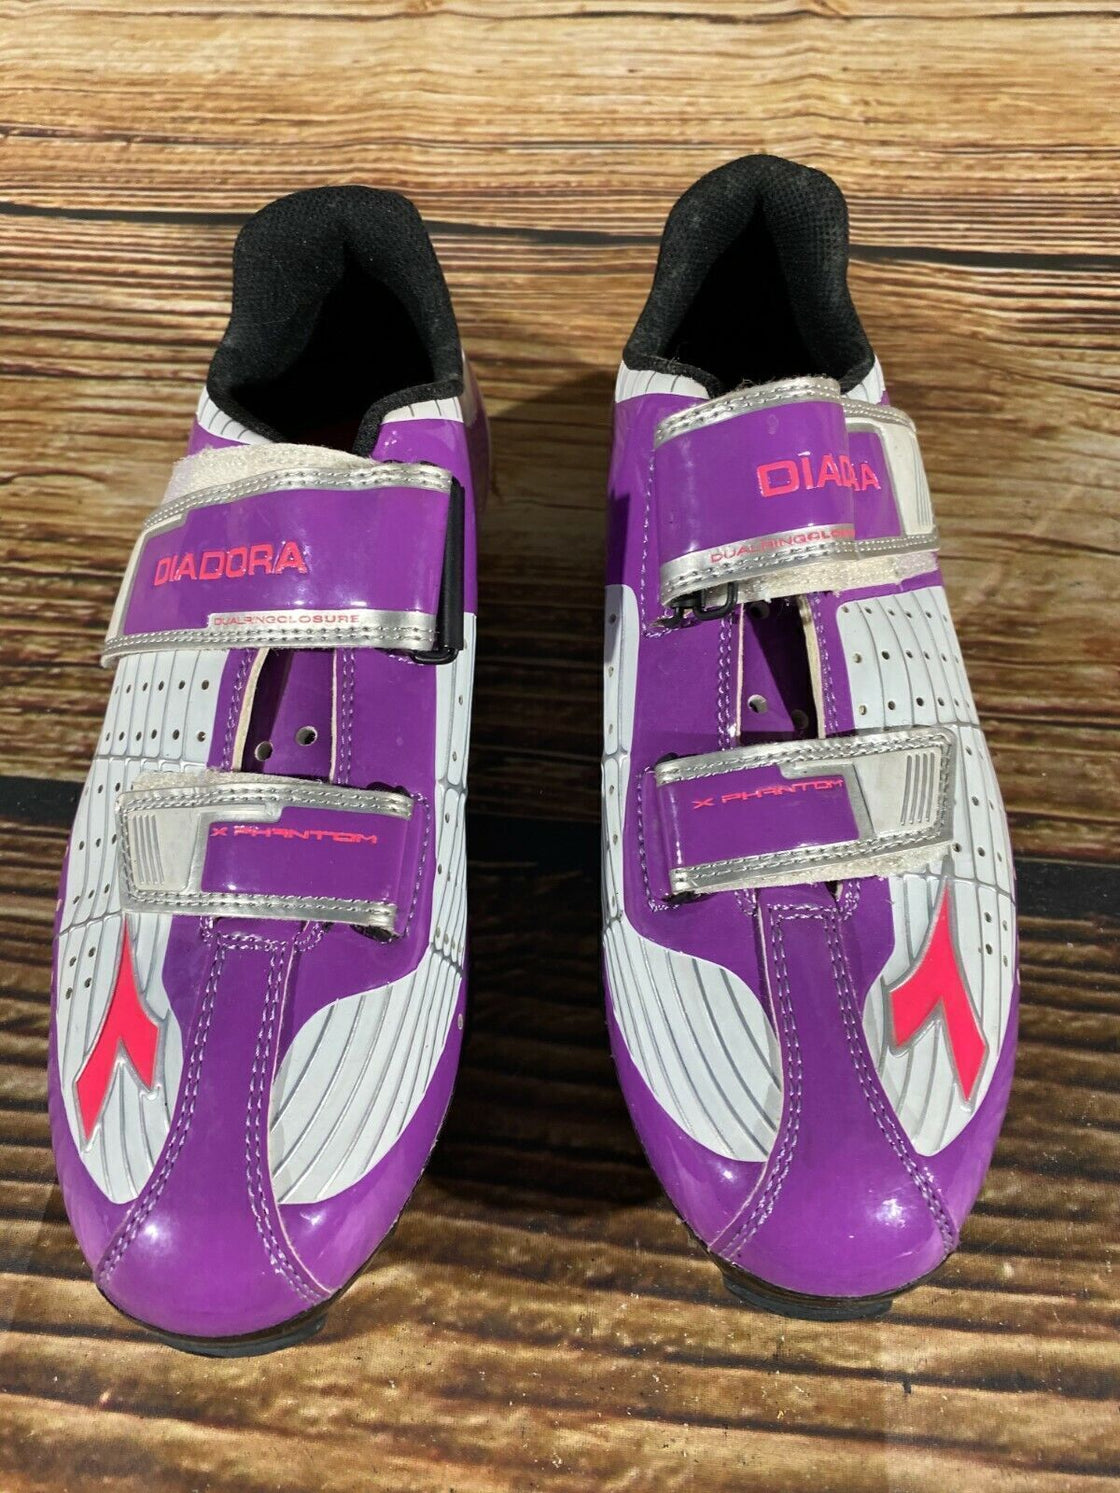 DIADORA Cycling Shoes MTB Mountain Biking Boots Ladies Size EU39 With SPD Cleats